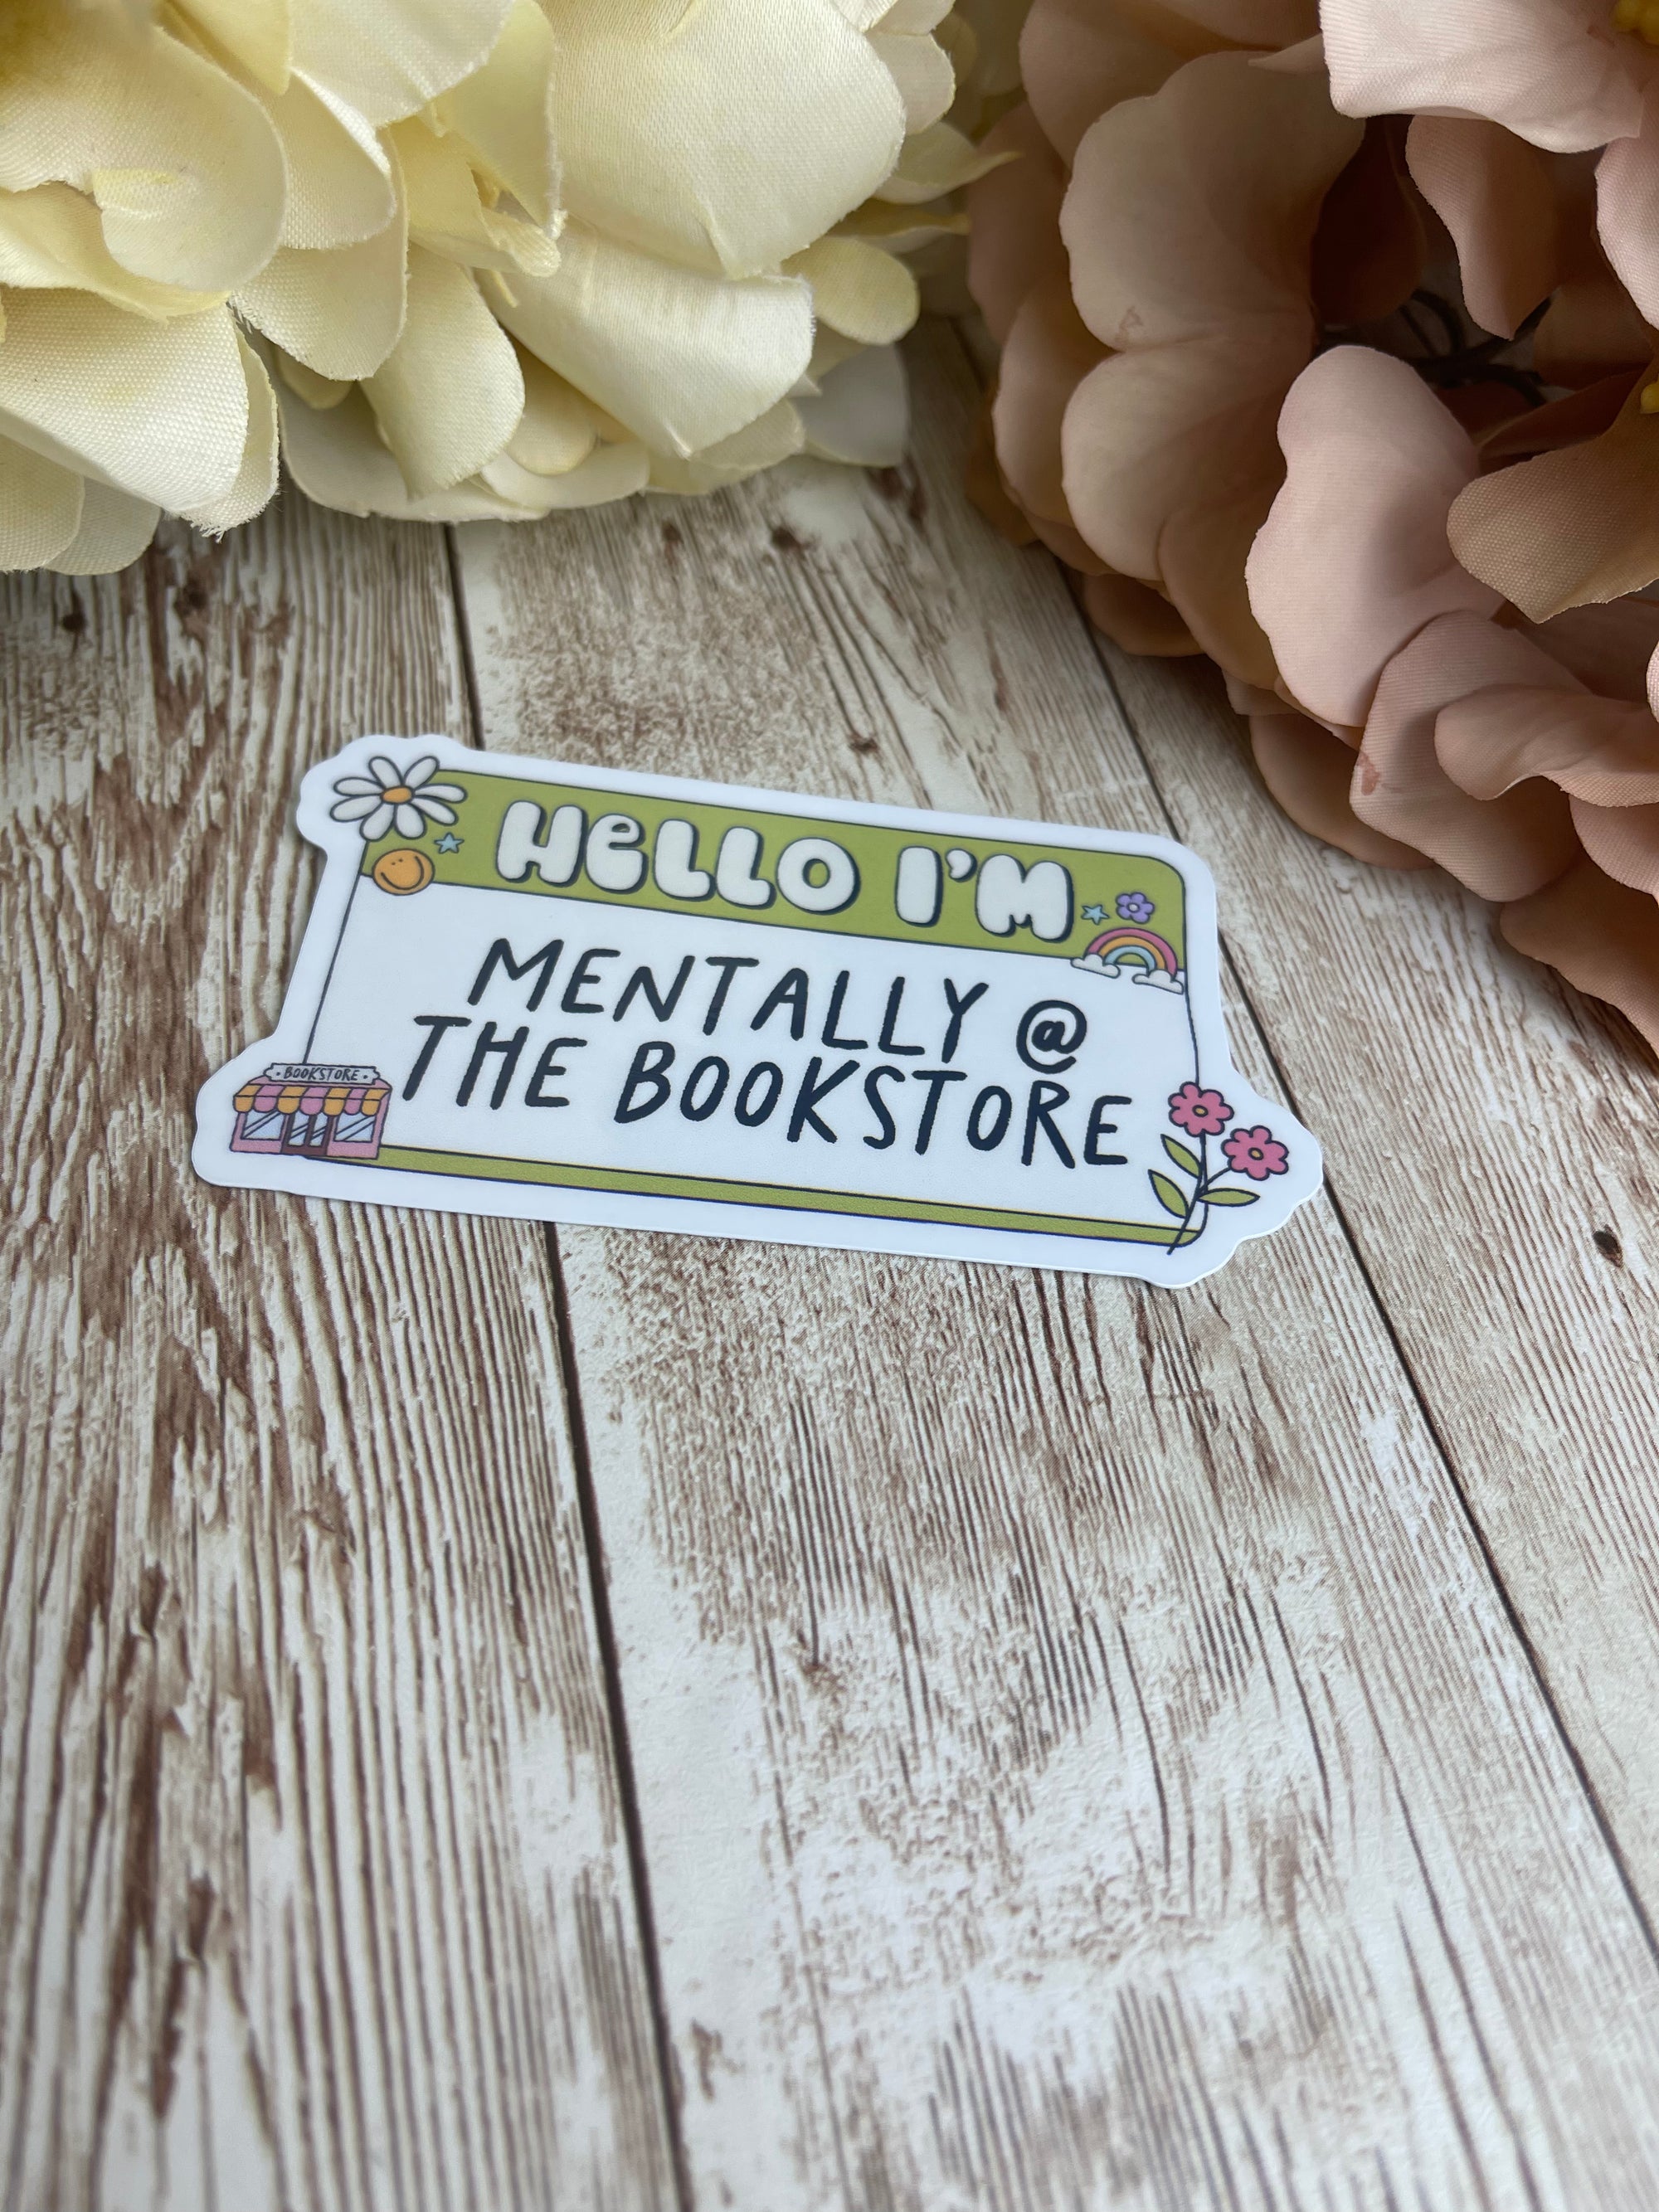 Mentally @ the Bookstore - Sticker